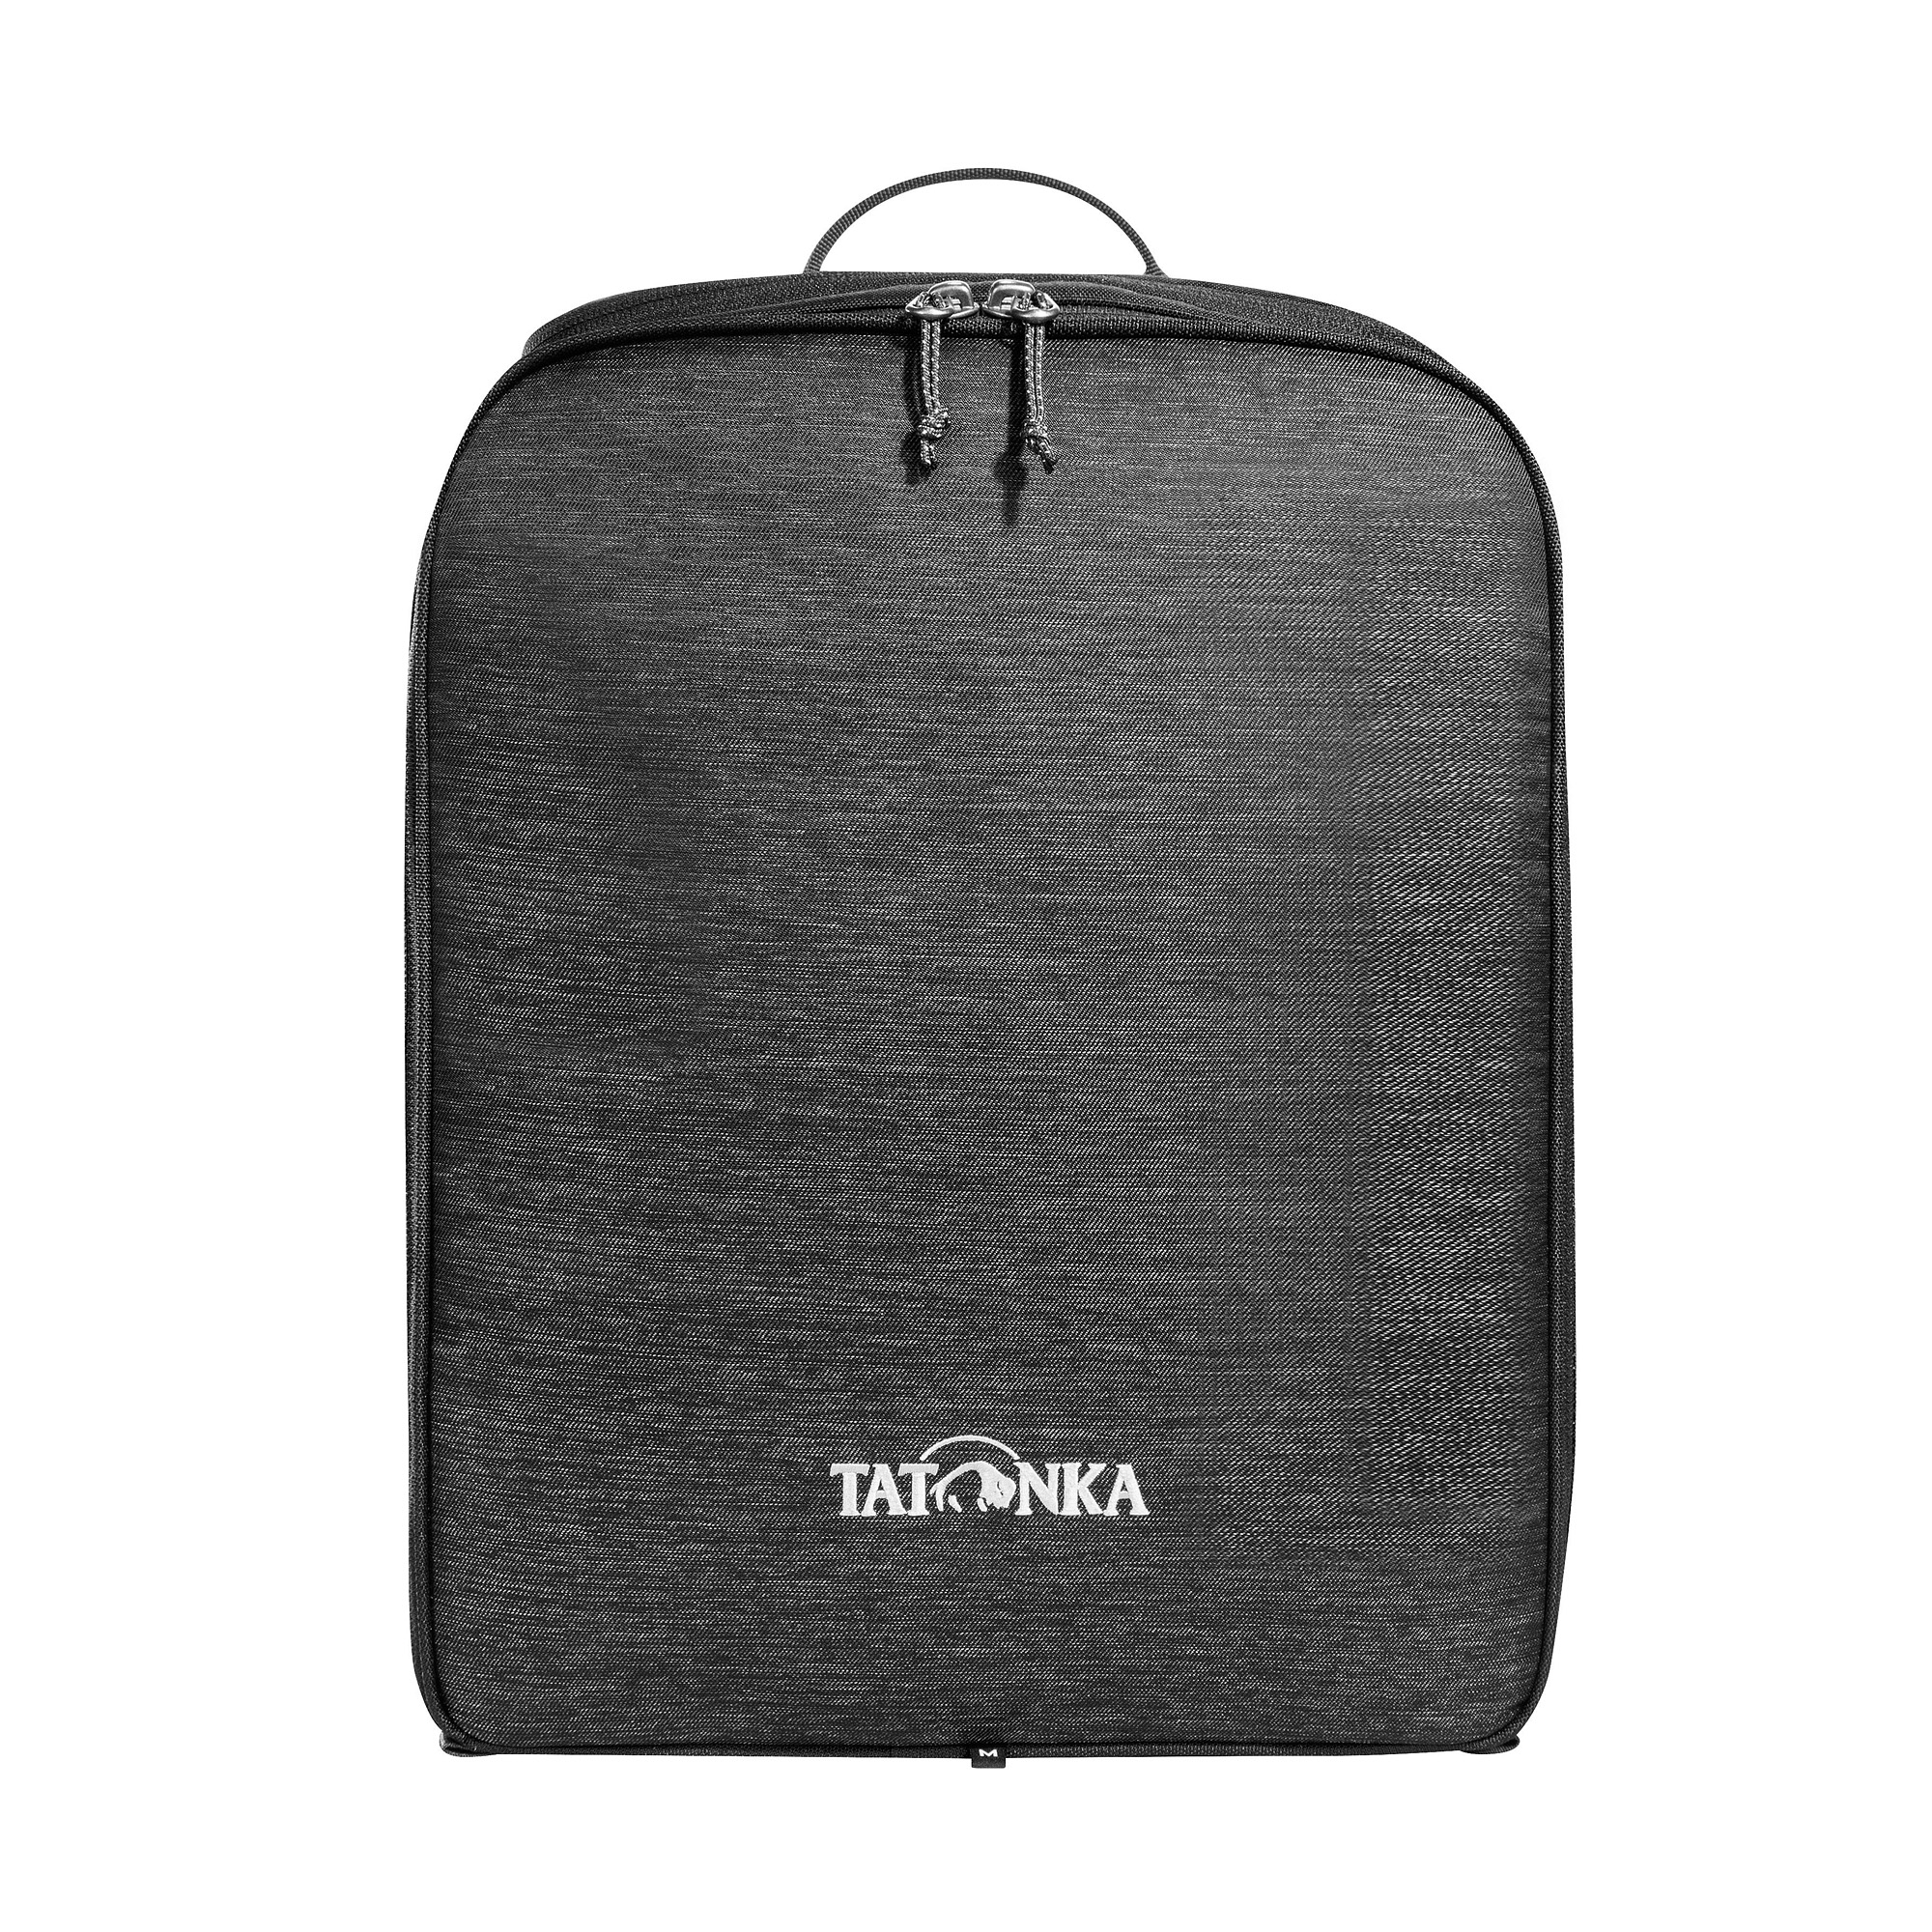 Tatonka Cooler Bag M off black schwarz Sonstige Taschen 4013236336337